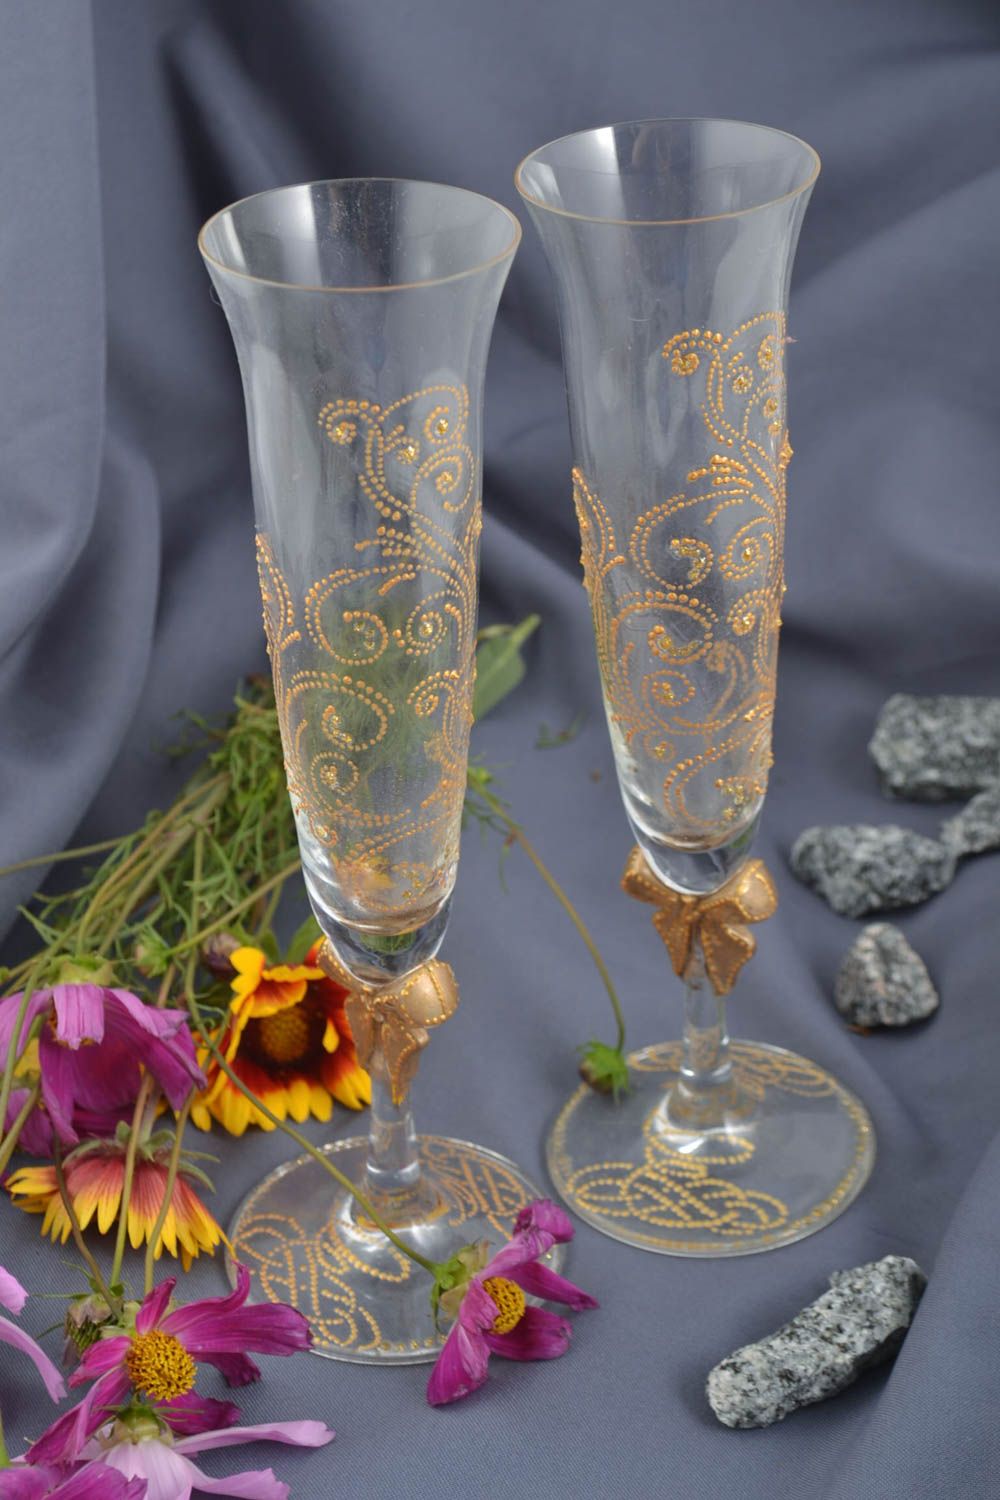 Handmade glasses for champagne beautiful stylish ware unusual cute glasses photo 1